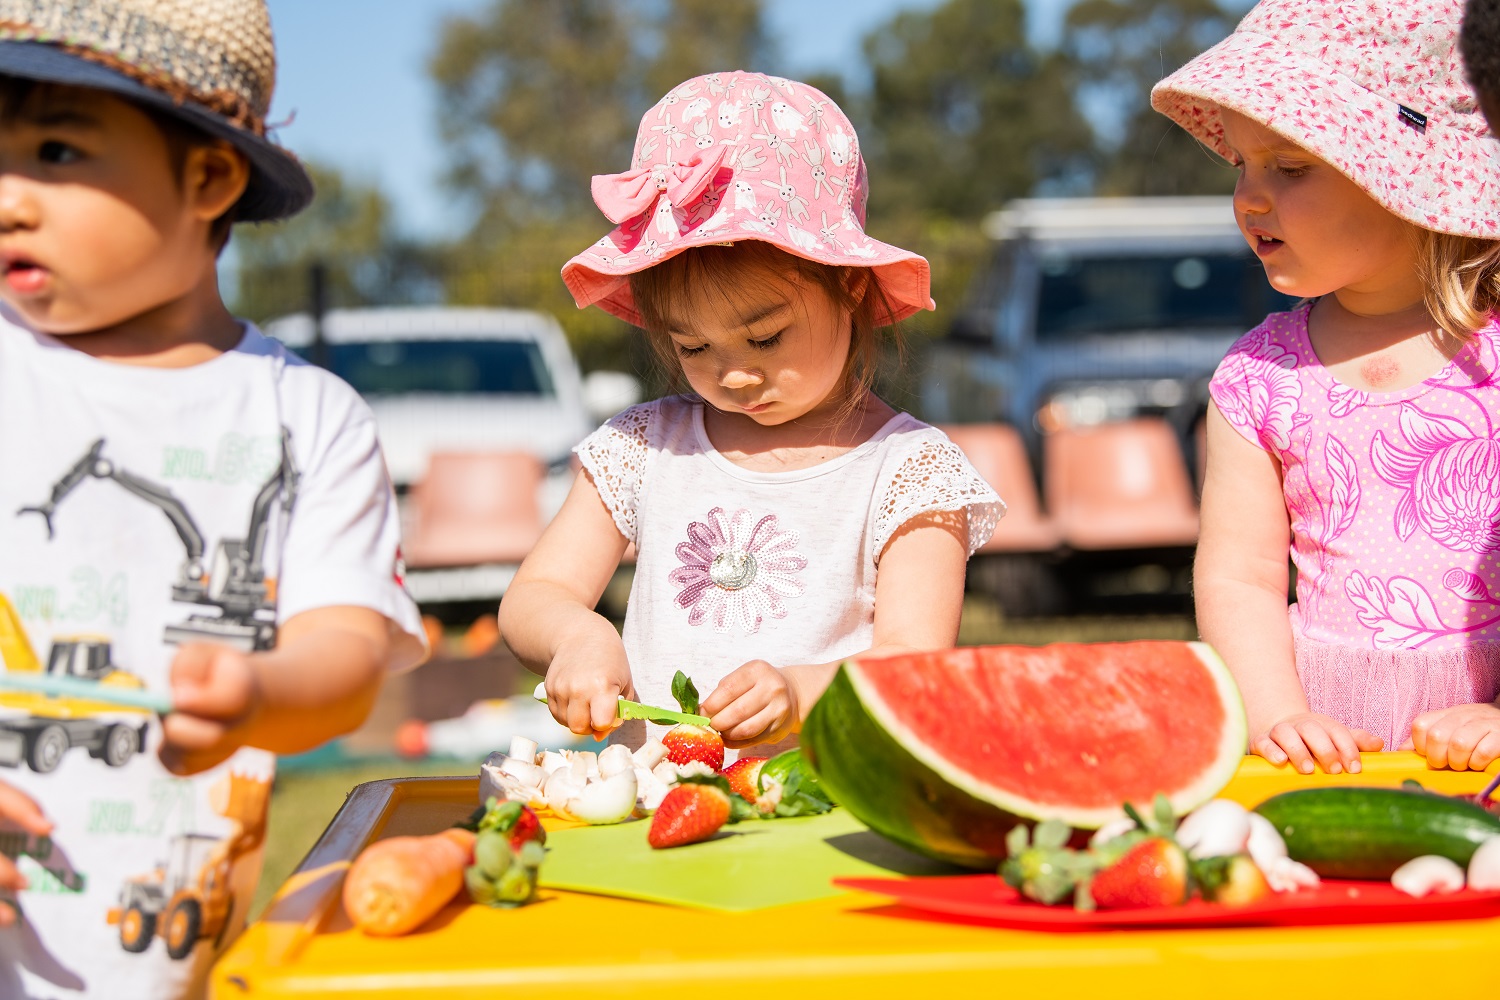 Children preparing fruit and vegetables